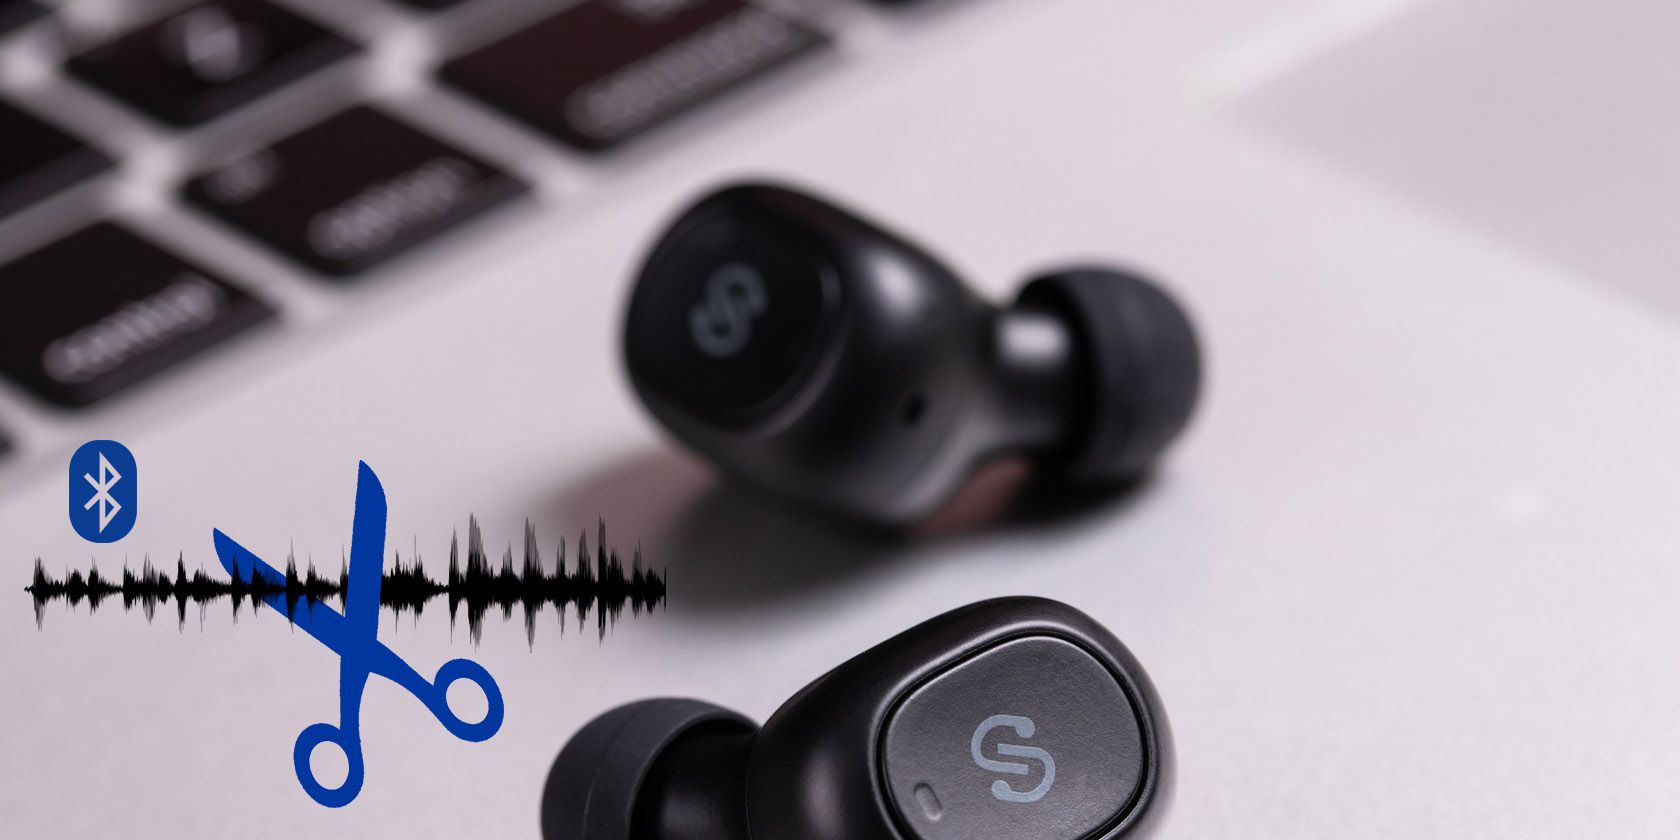 Fix for bluetooth headphones or speaker using hands-free audio